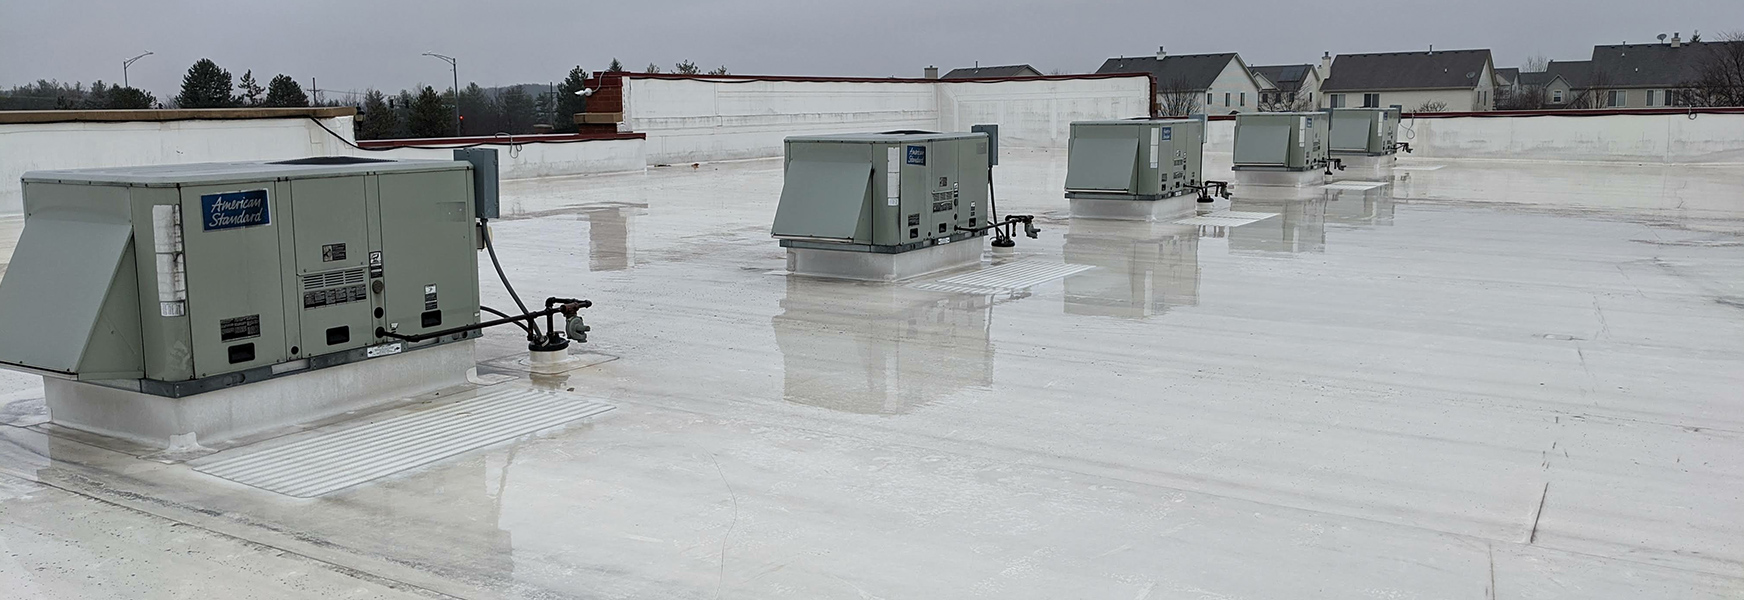 HVAC units on commercial building